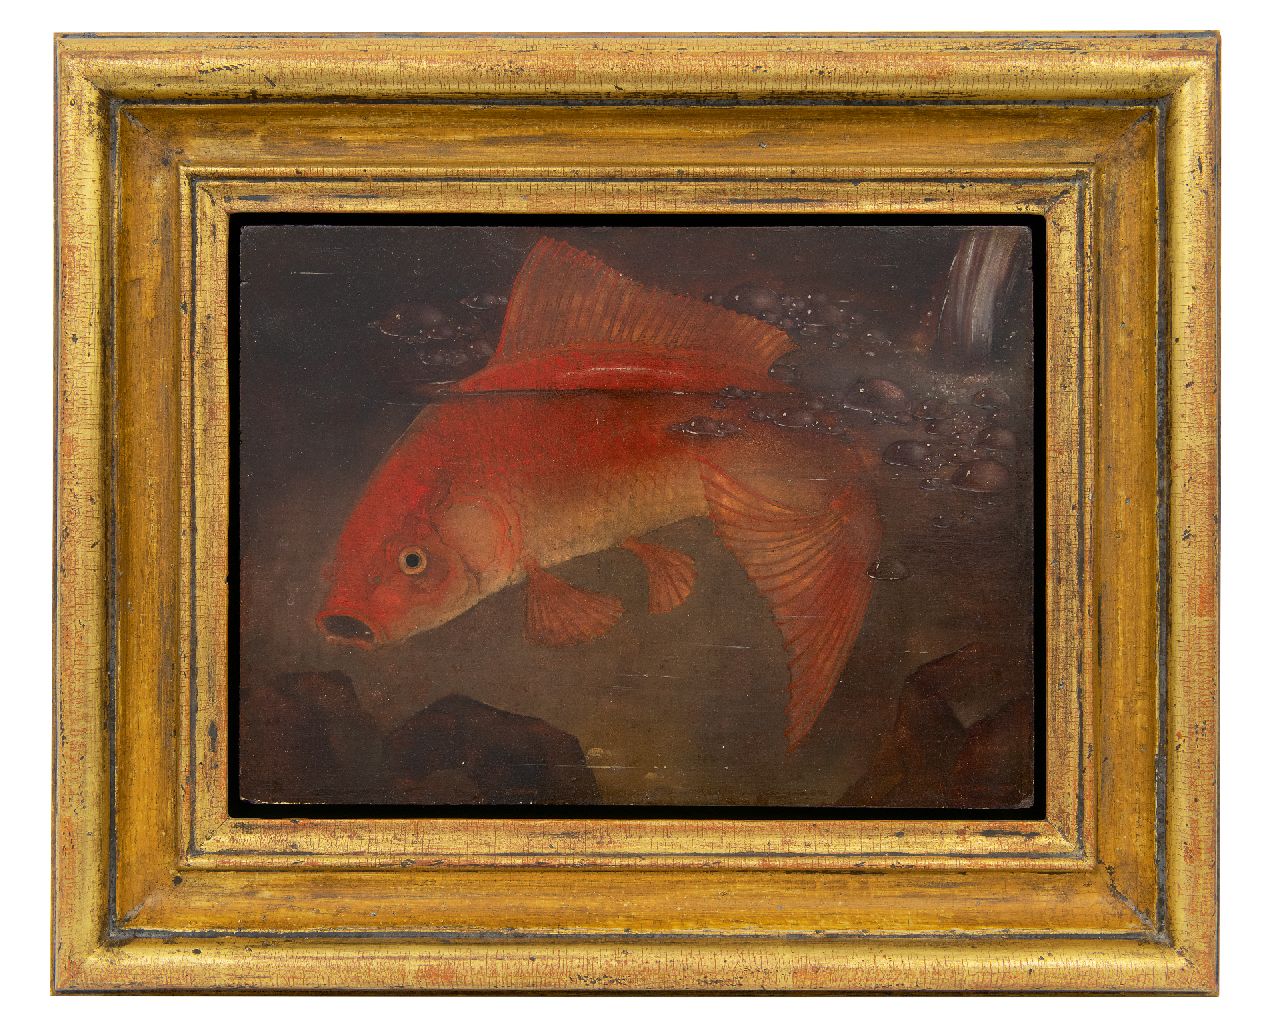 Hoboken J. van | Jacoba 'Jemmy' van Hoboken | Paintings offered for sale | Goldfish, oil on panel 23.8 x 33.0 cm, signed l.r. and dated 1930